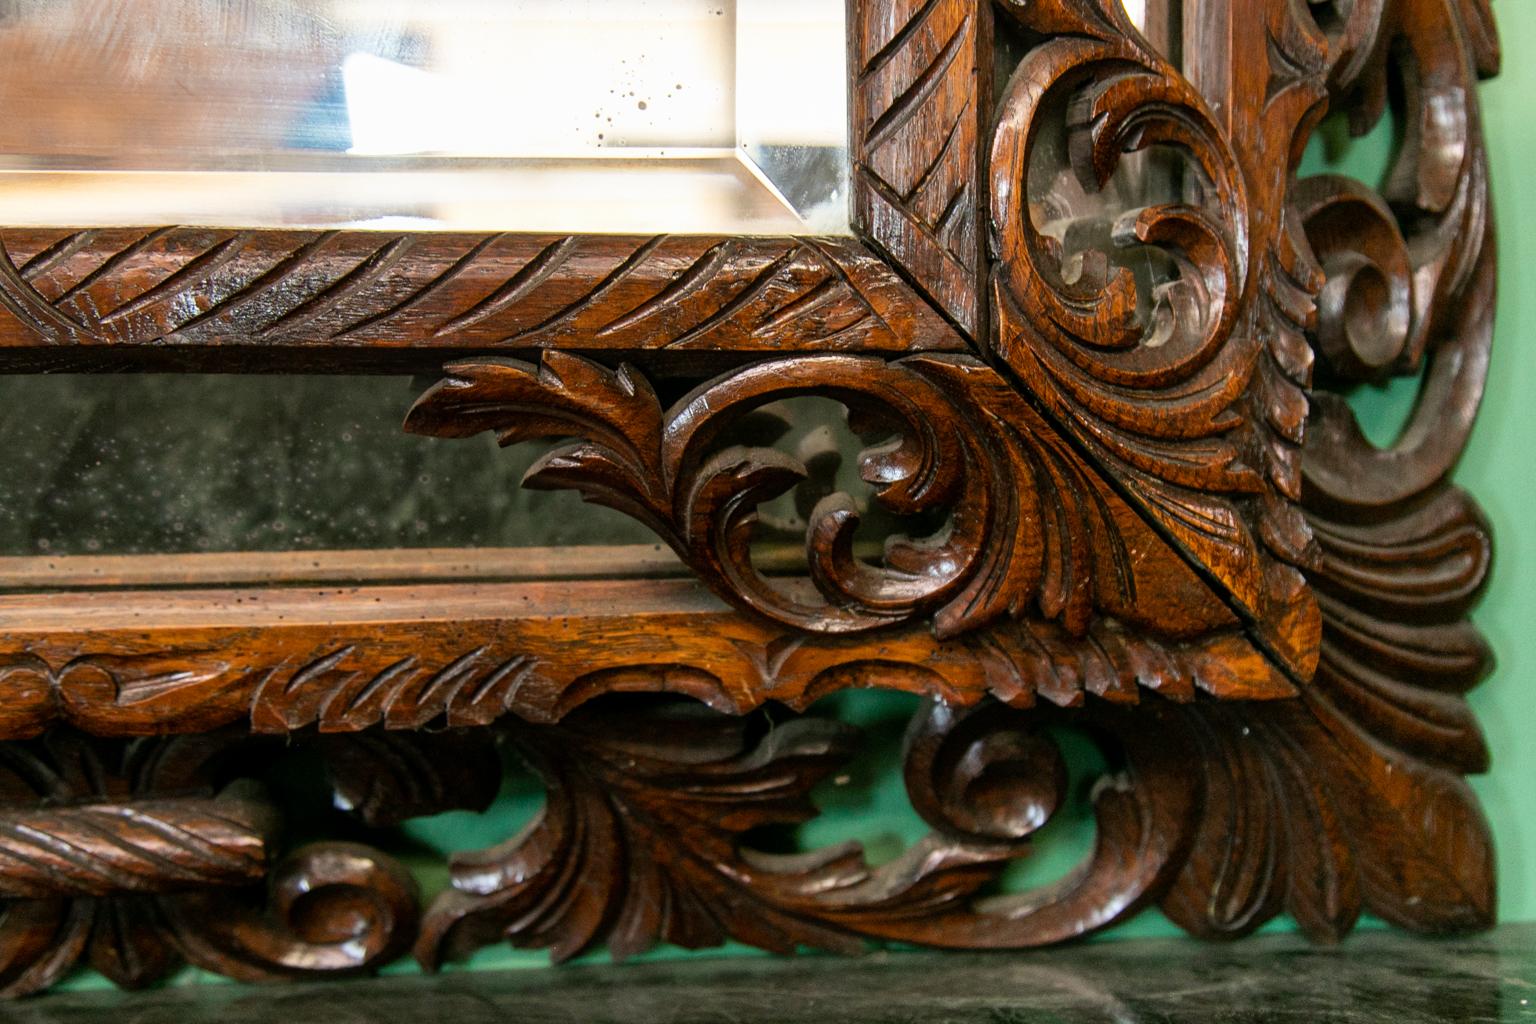 carved oak mirror